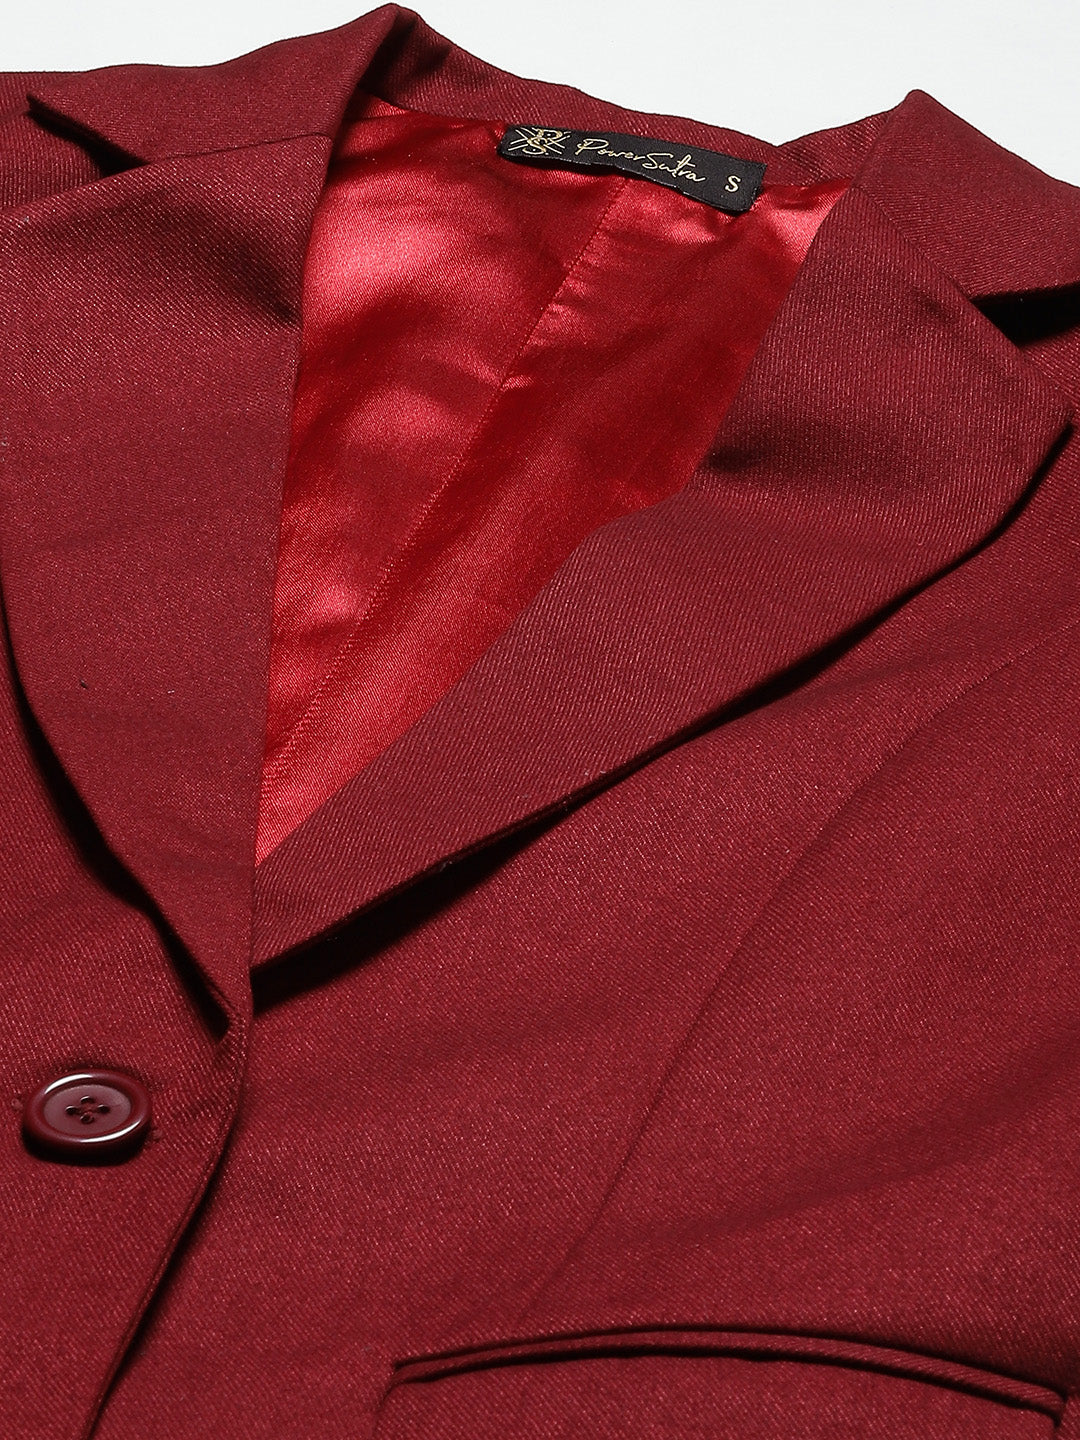 Warm Tweed Blazer - Wine Red